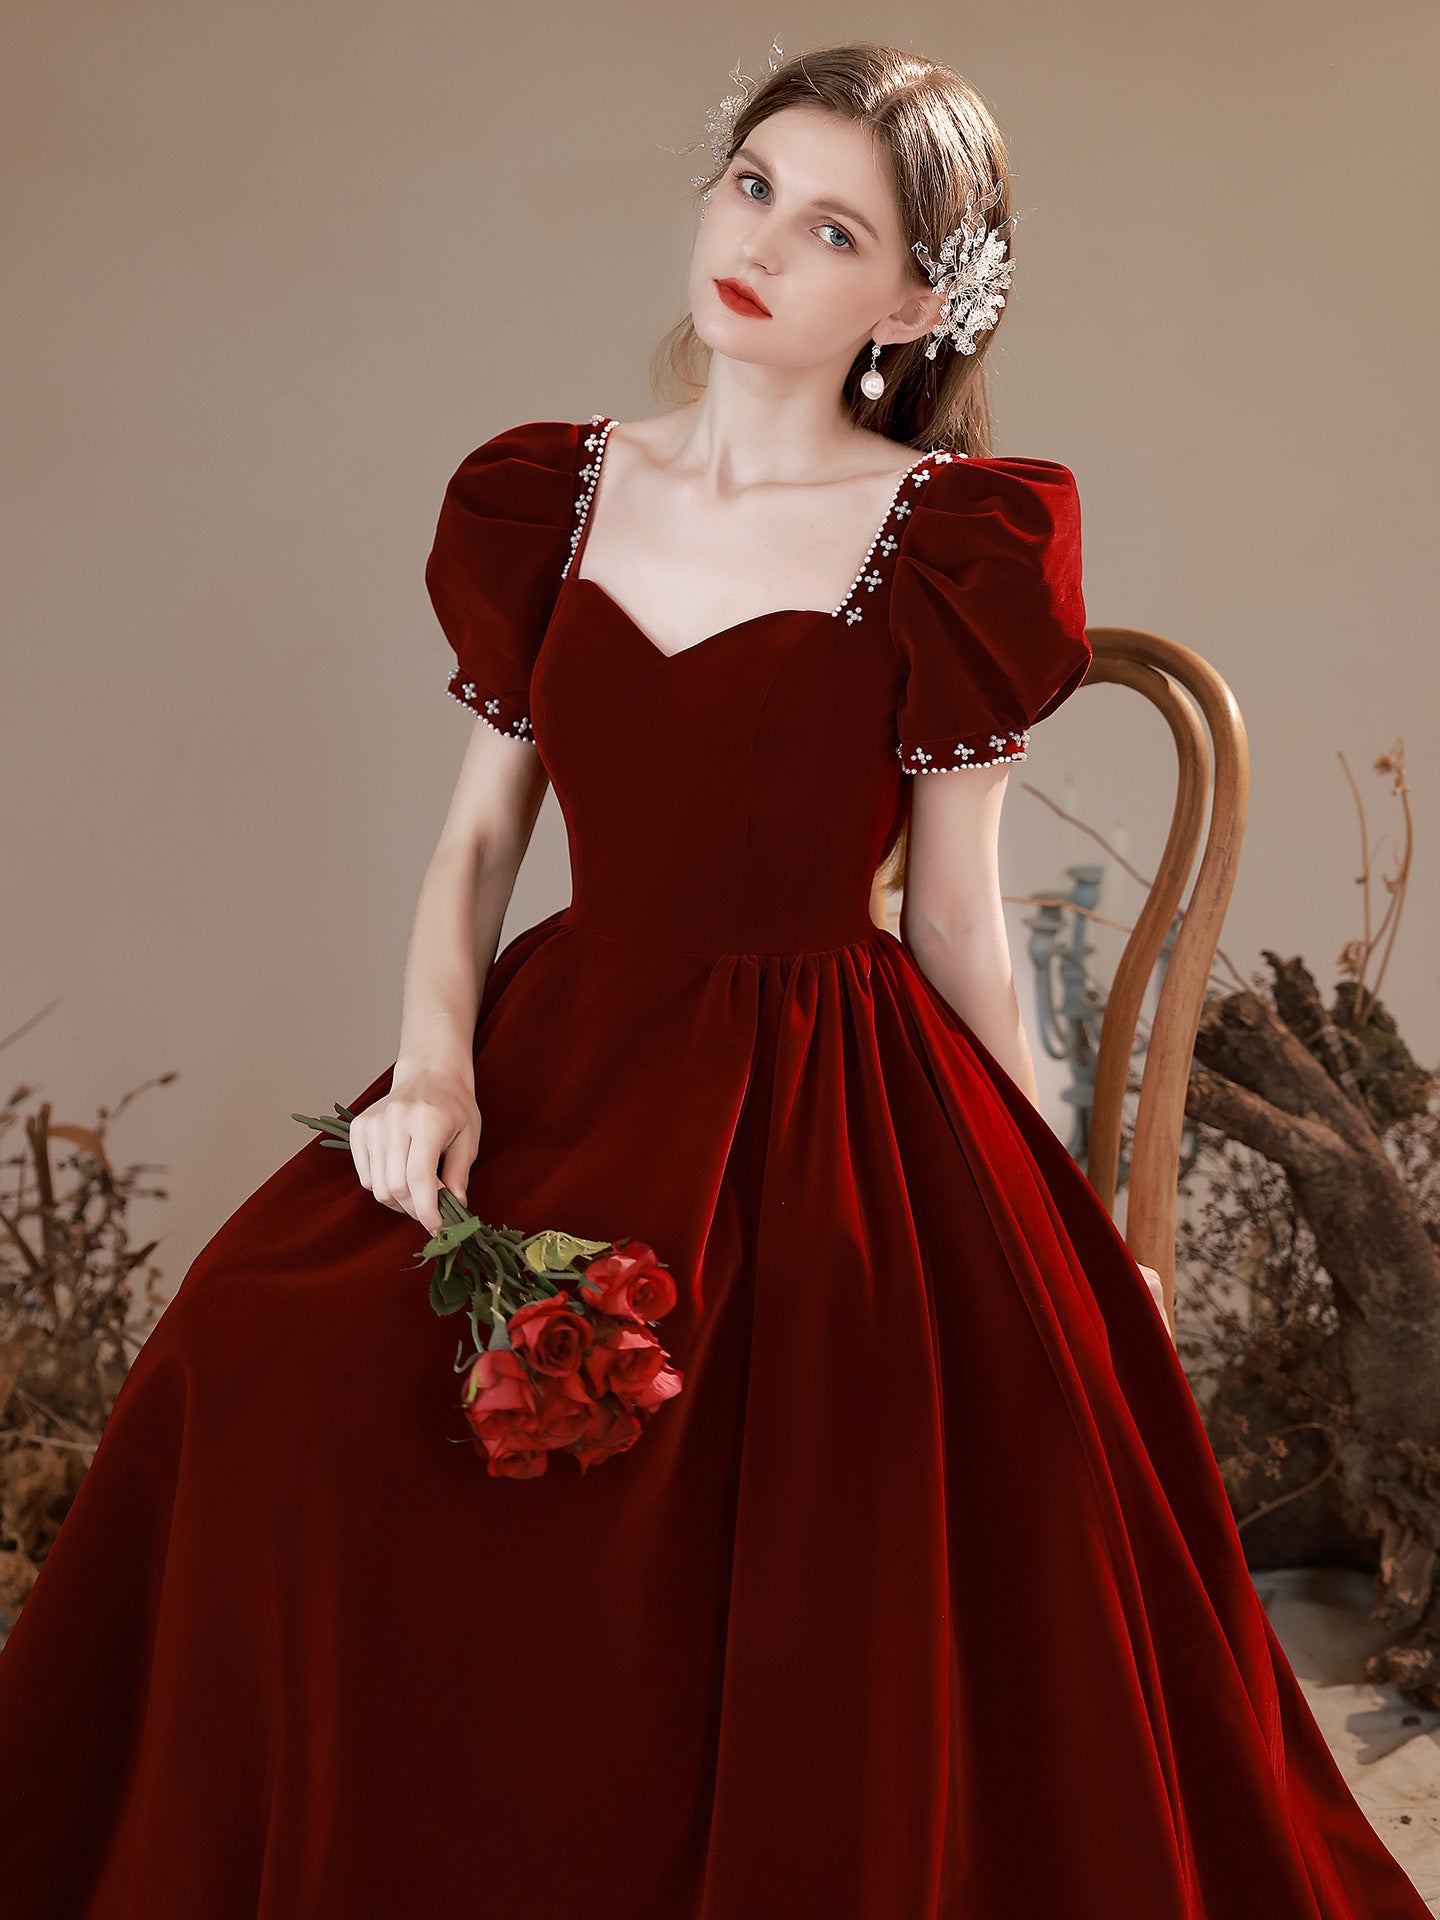 Sweetheart A Line Long Prom Dress Puff Sleeves Velvet Burgundy Evening Gown 574